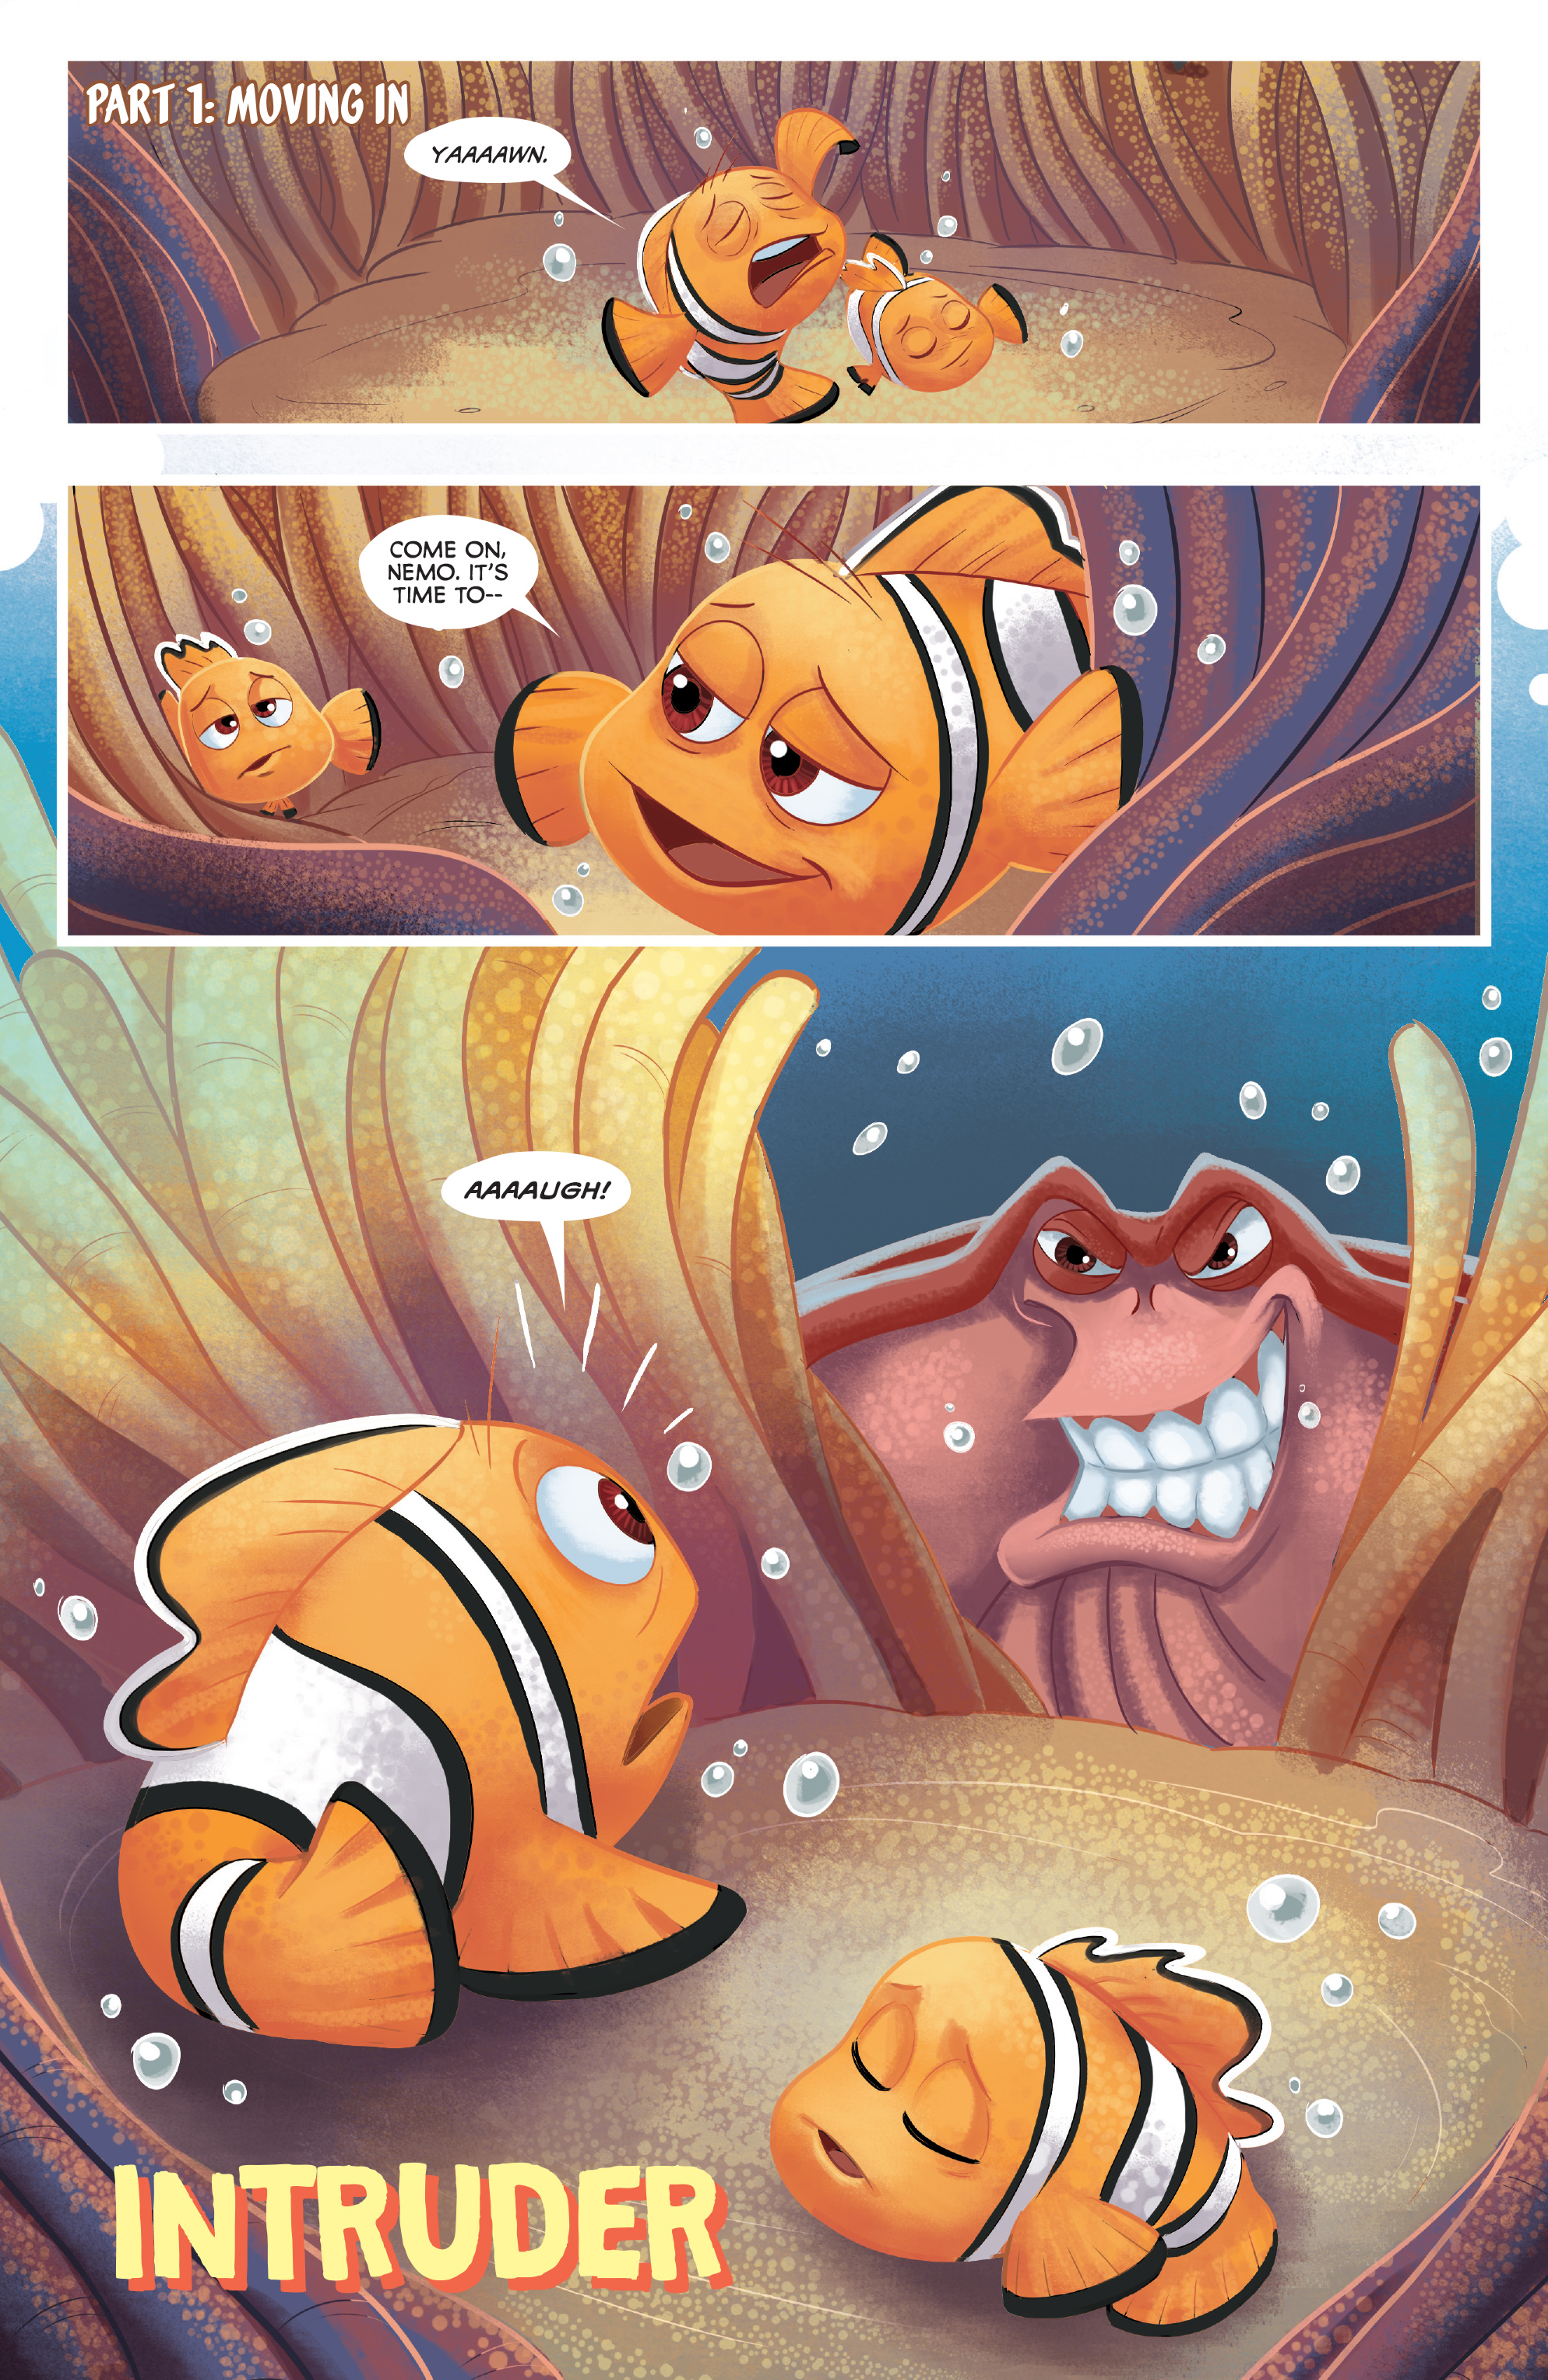 Finding Nemo Porn Comic - Disney Pixar Finding Dory Issue 3 | Read Disney Pixar Finding Dory Issue 3  comic online in high quality. Read Full Comic online for free - Read comics  online in high quality .| READ COMIC ONLINE